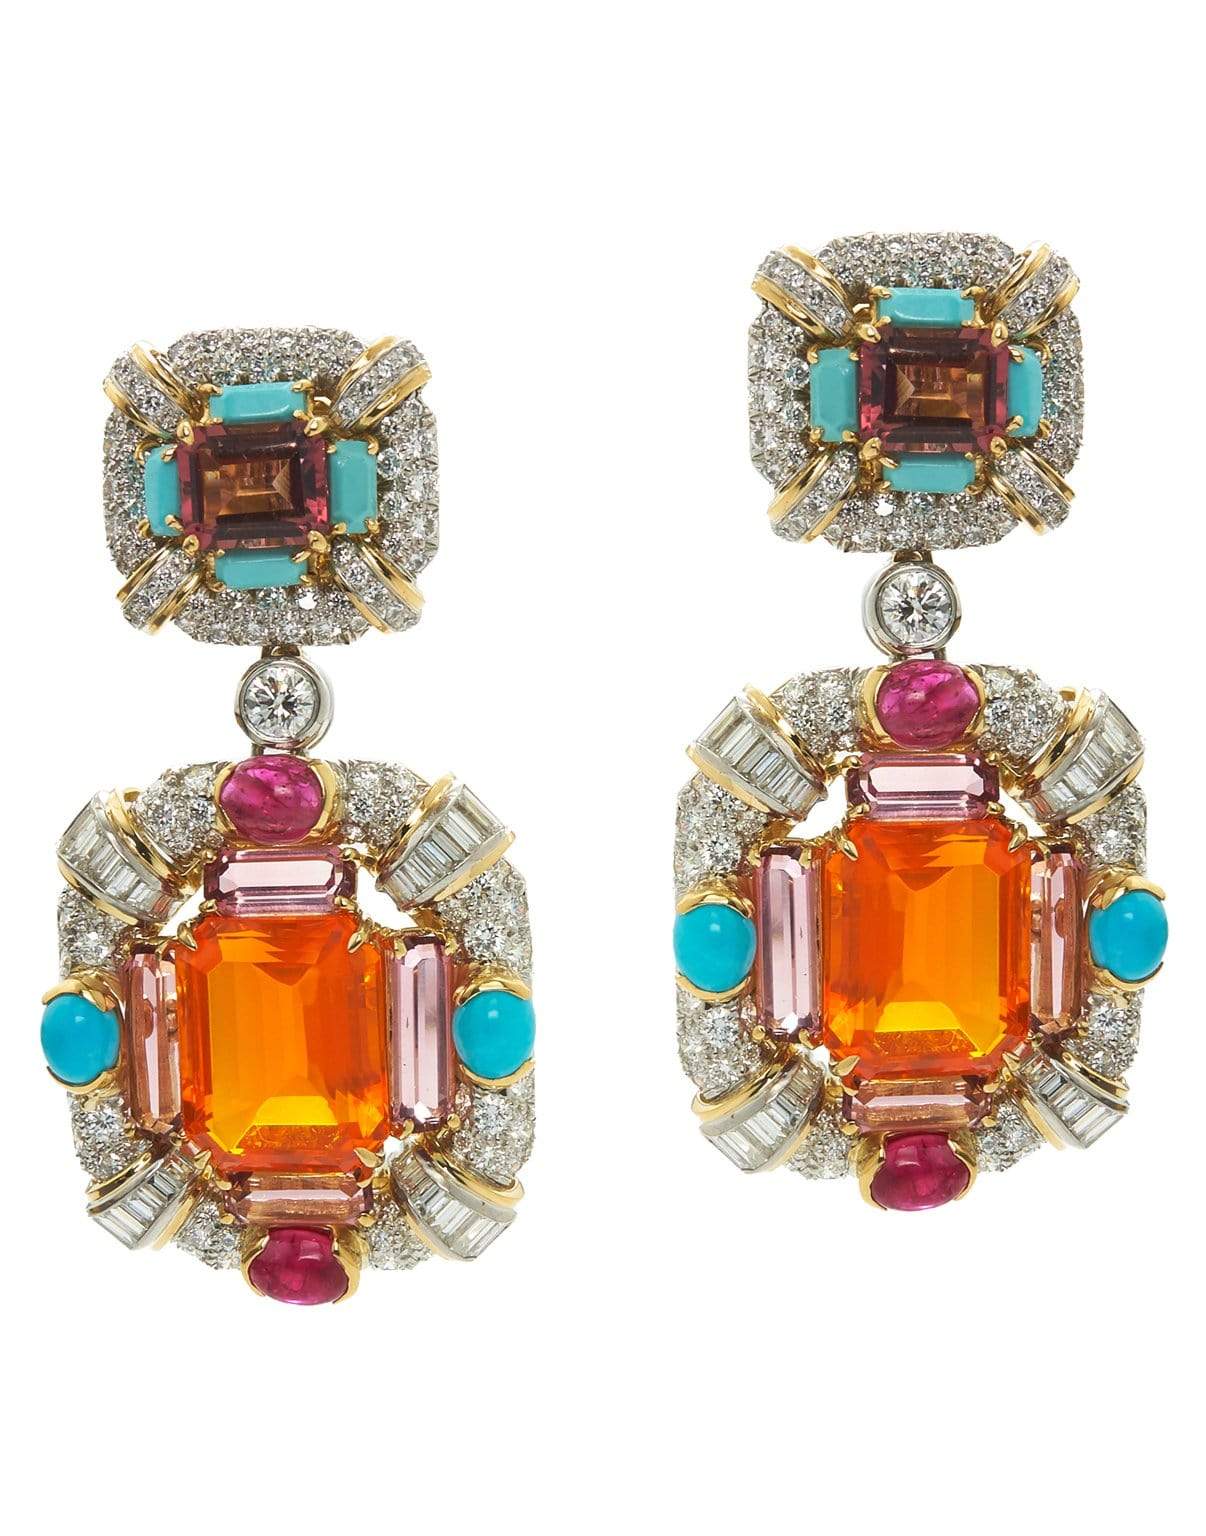 Couture Fire Opal, Turquoise and Diamond Earrings JEWELRYFINE JEWELEARRING DAVID WEBB   